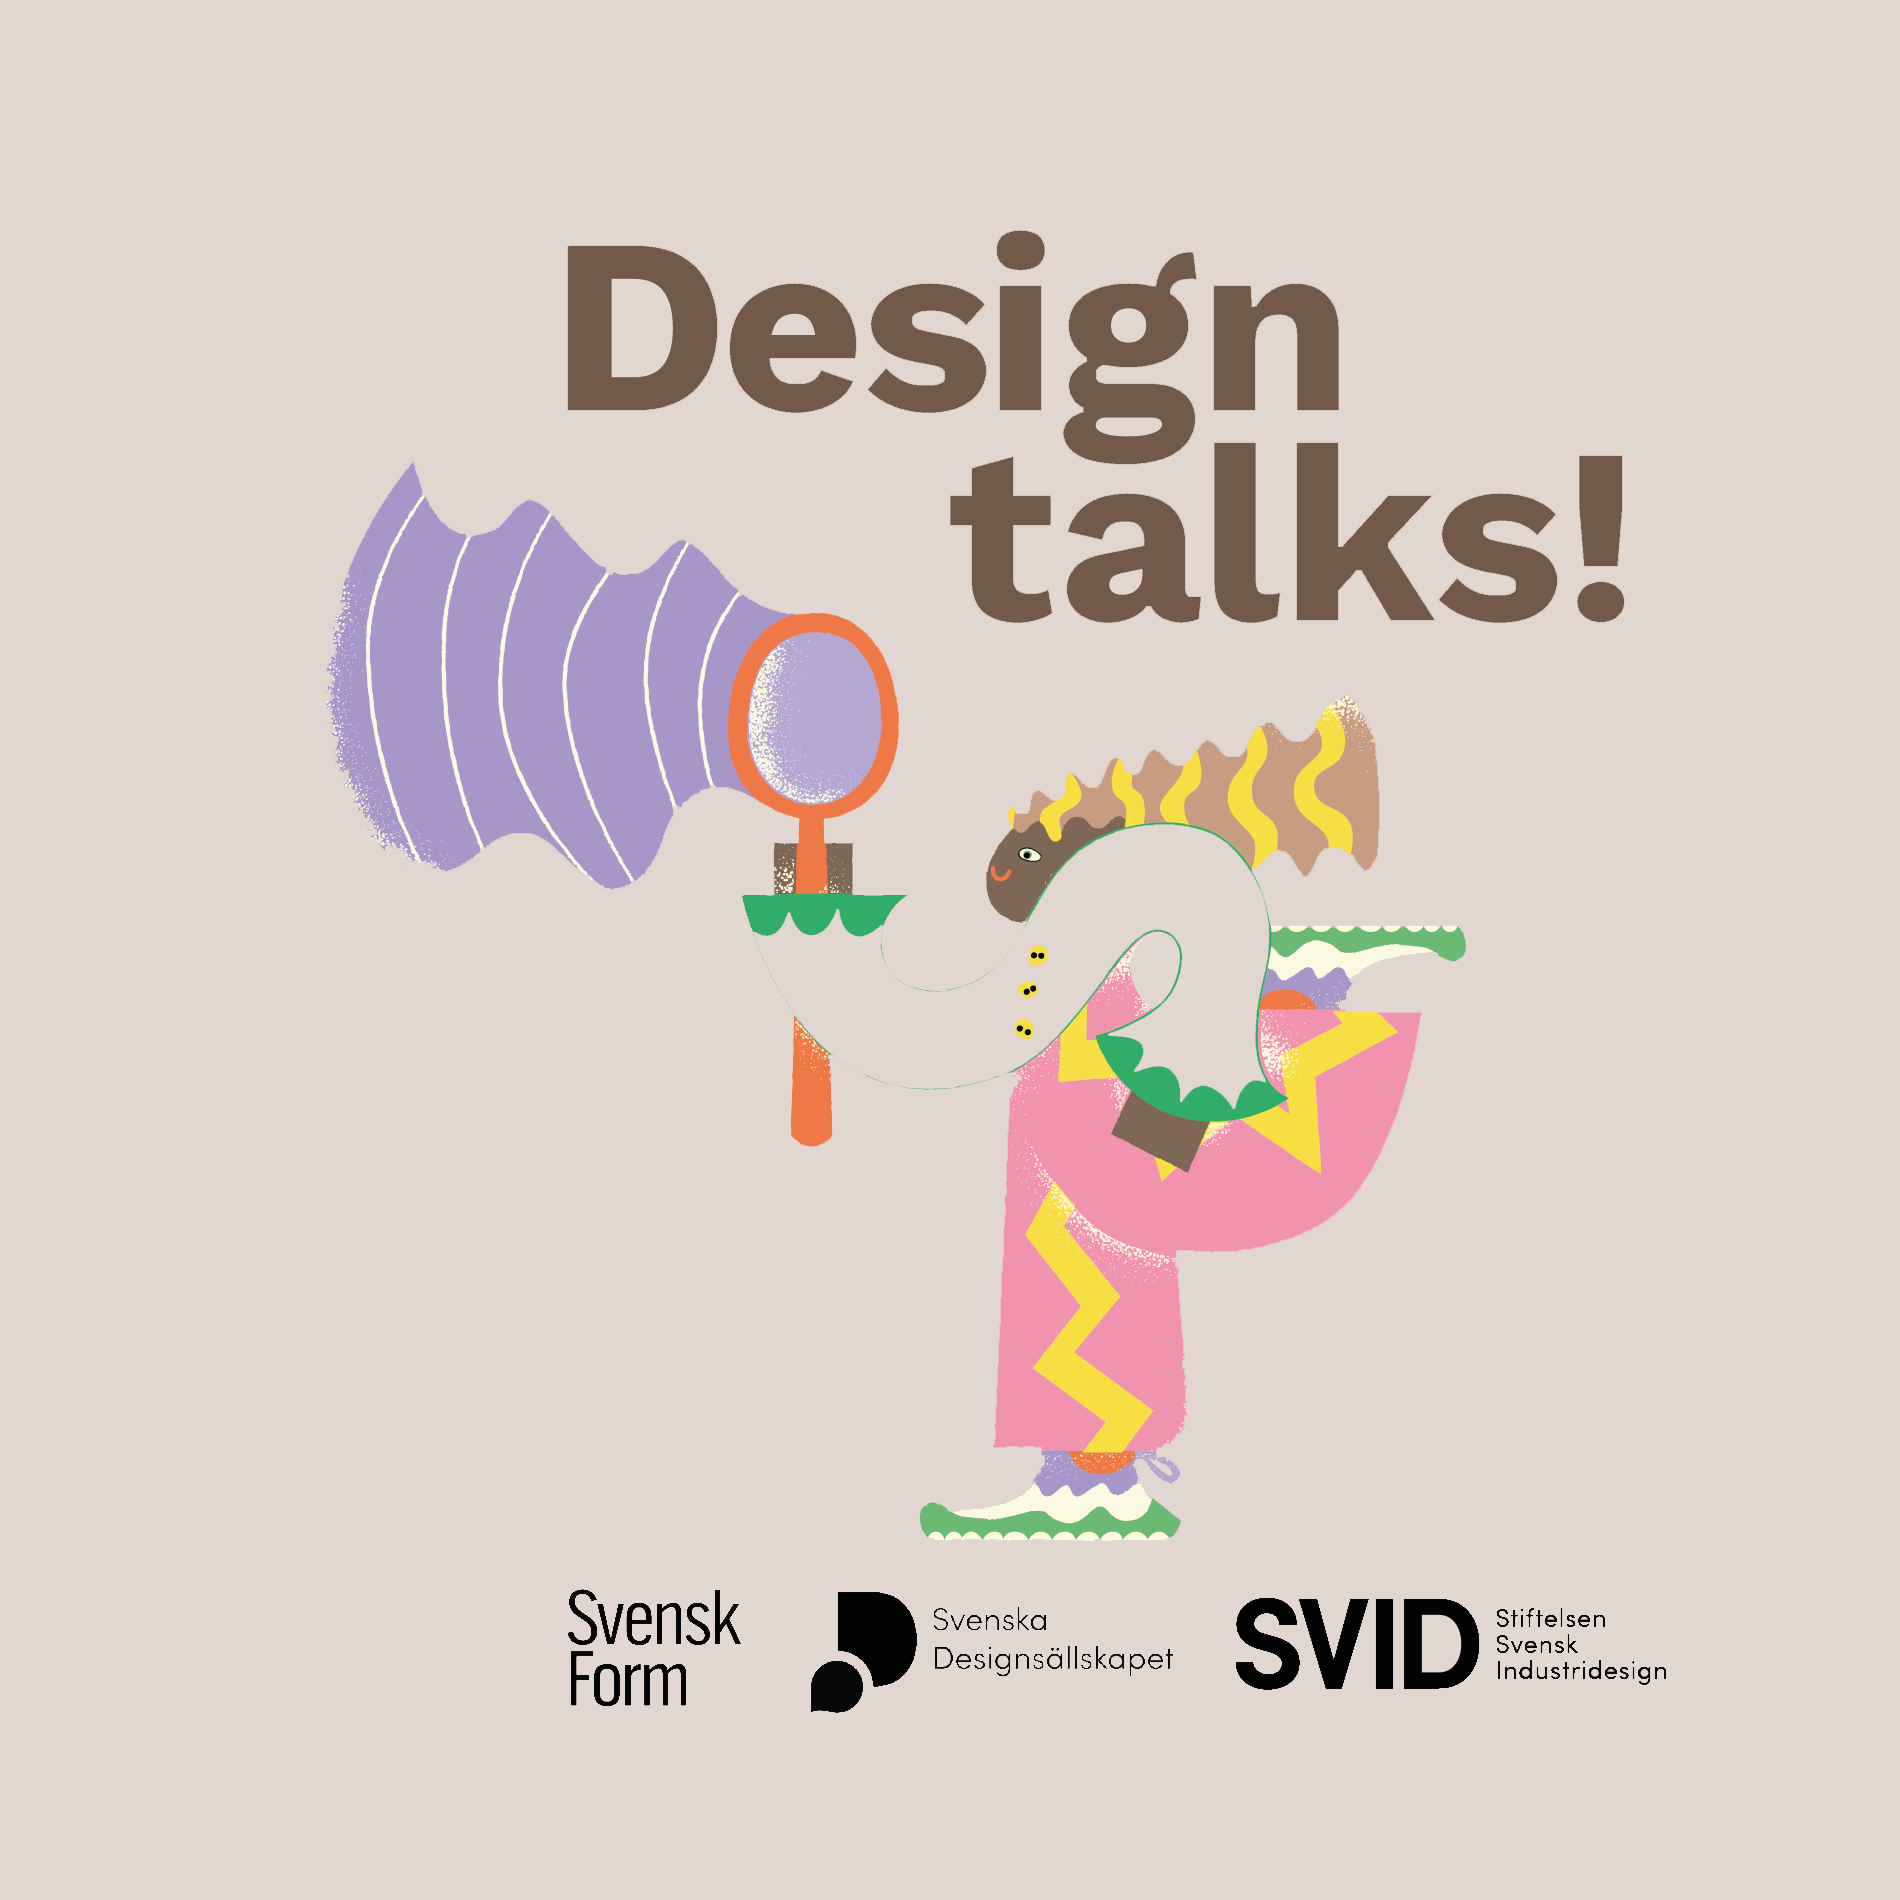 Design talks!